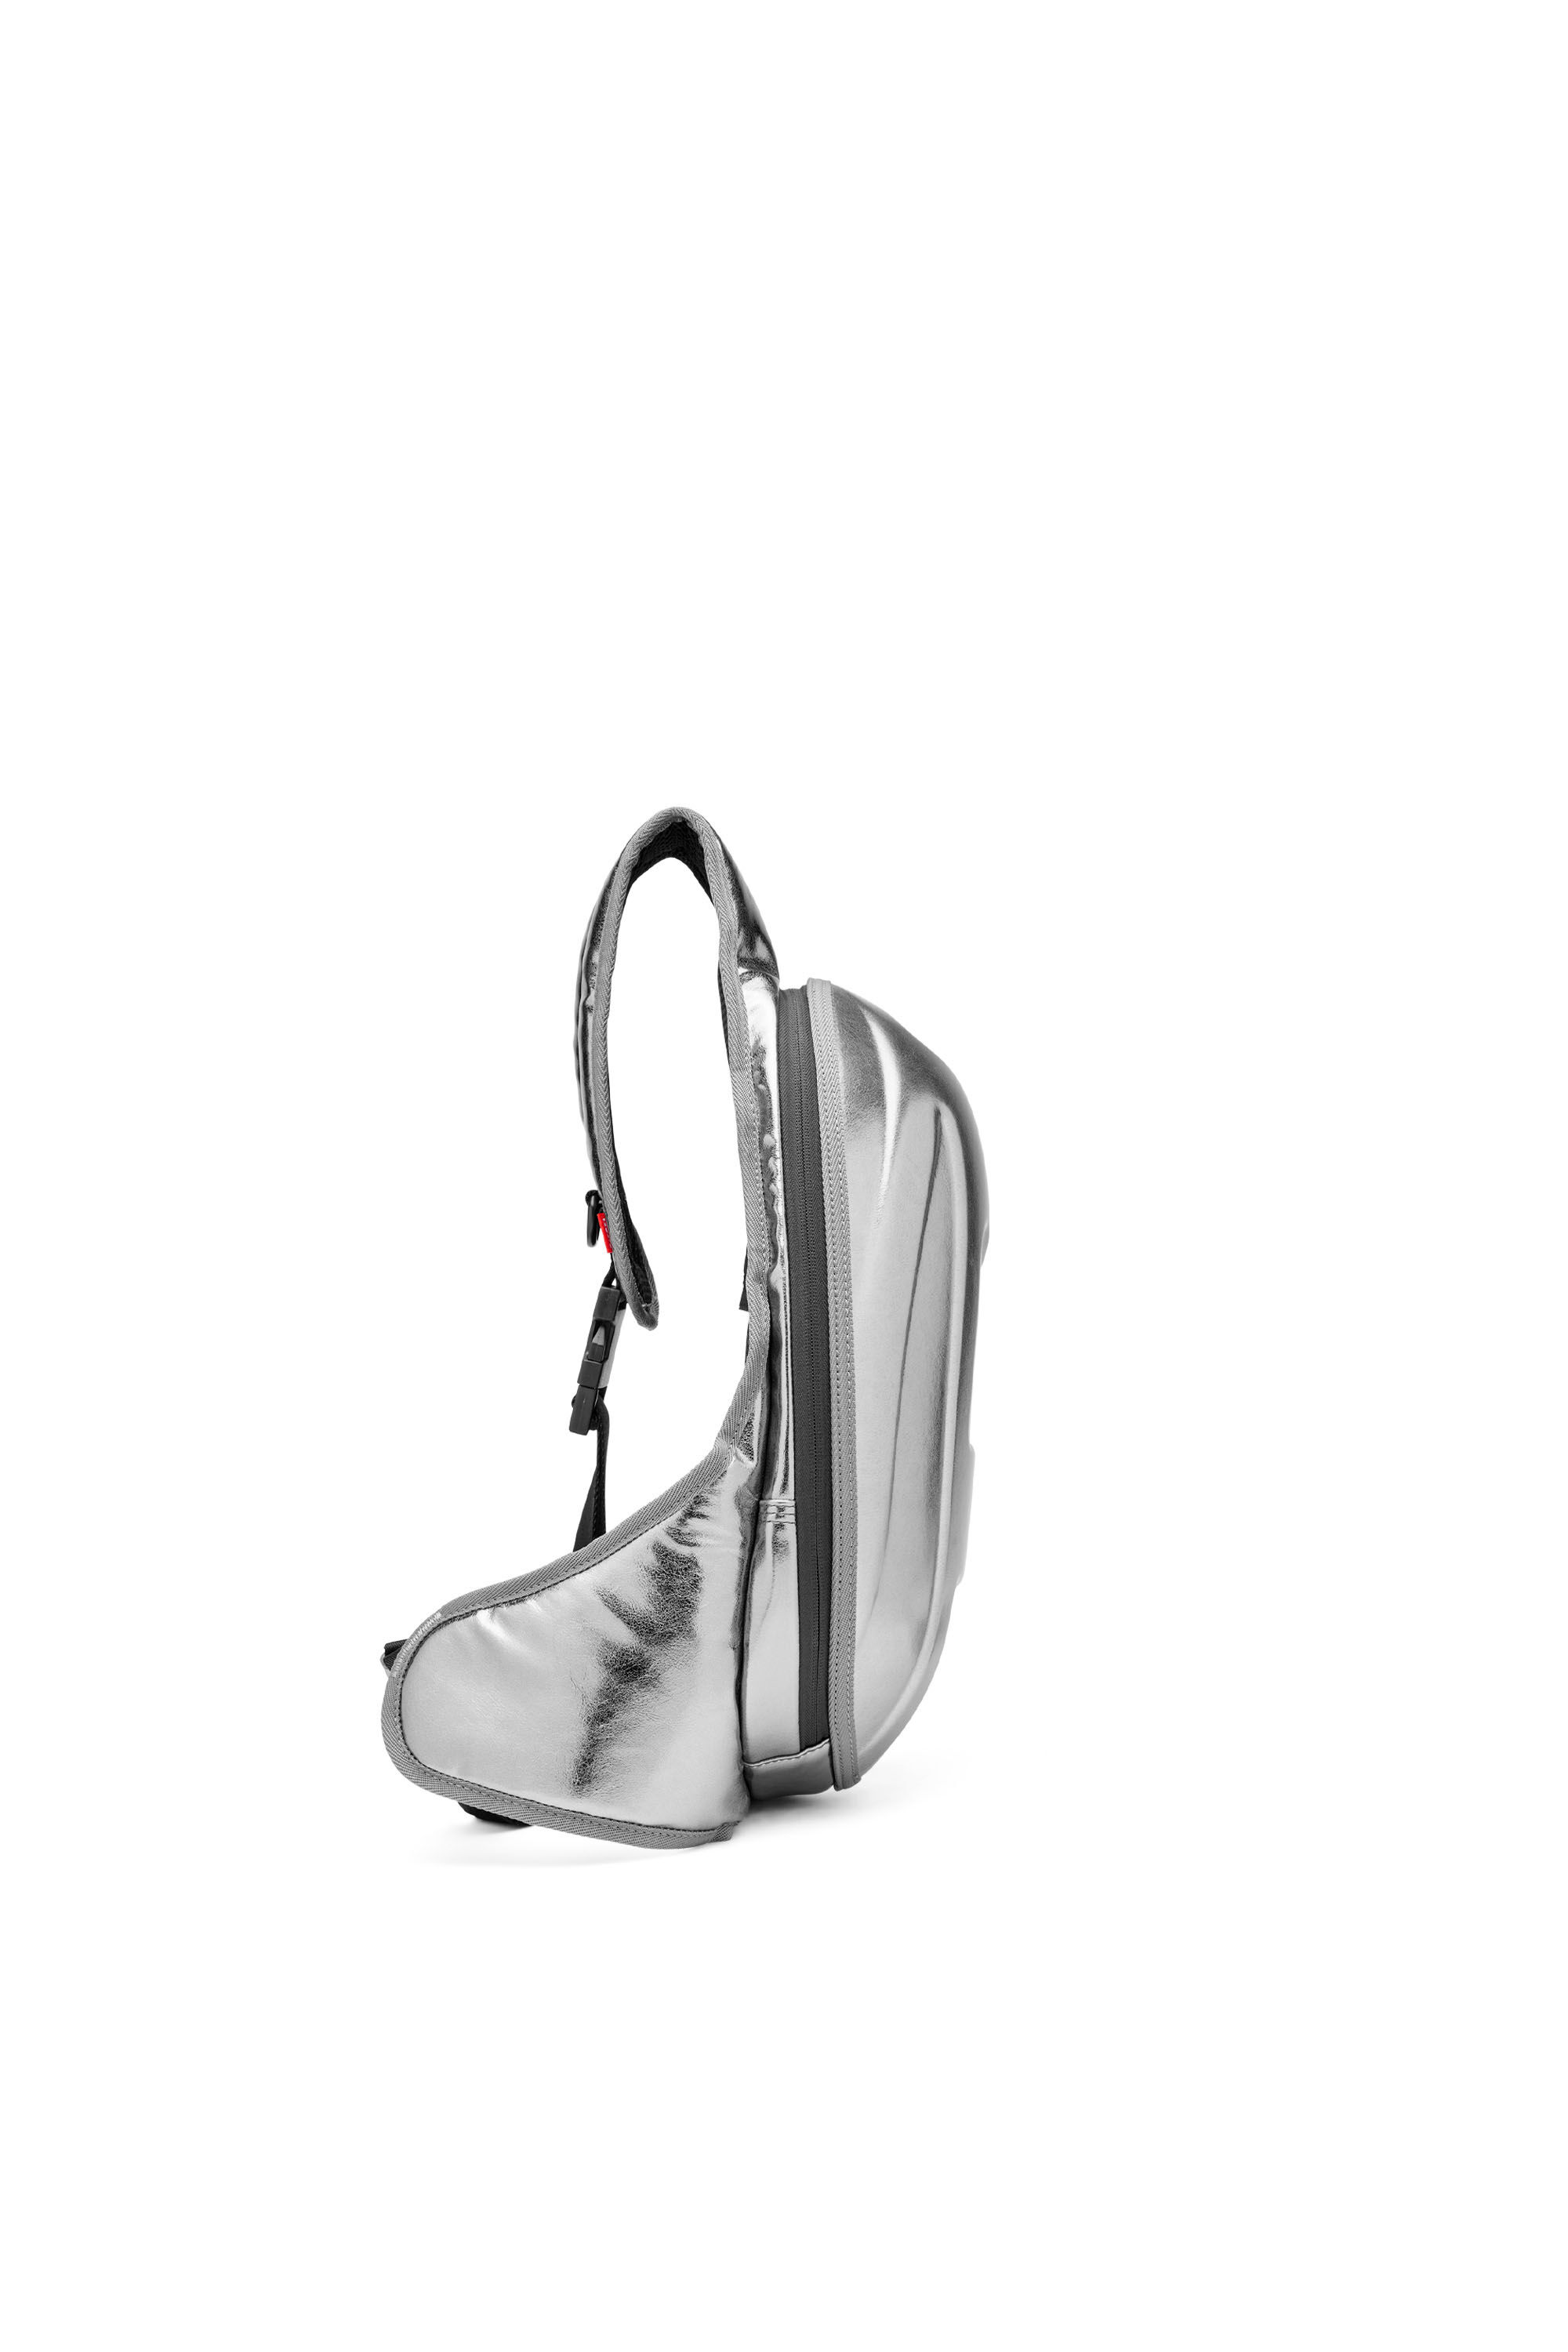 1DR-POD SLING BAG Man: Rigid metallic sling backpack | Diesel